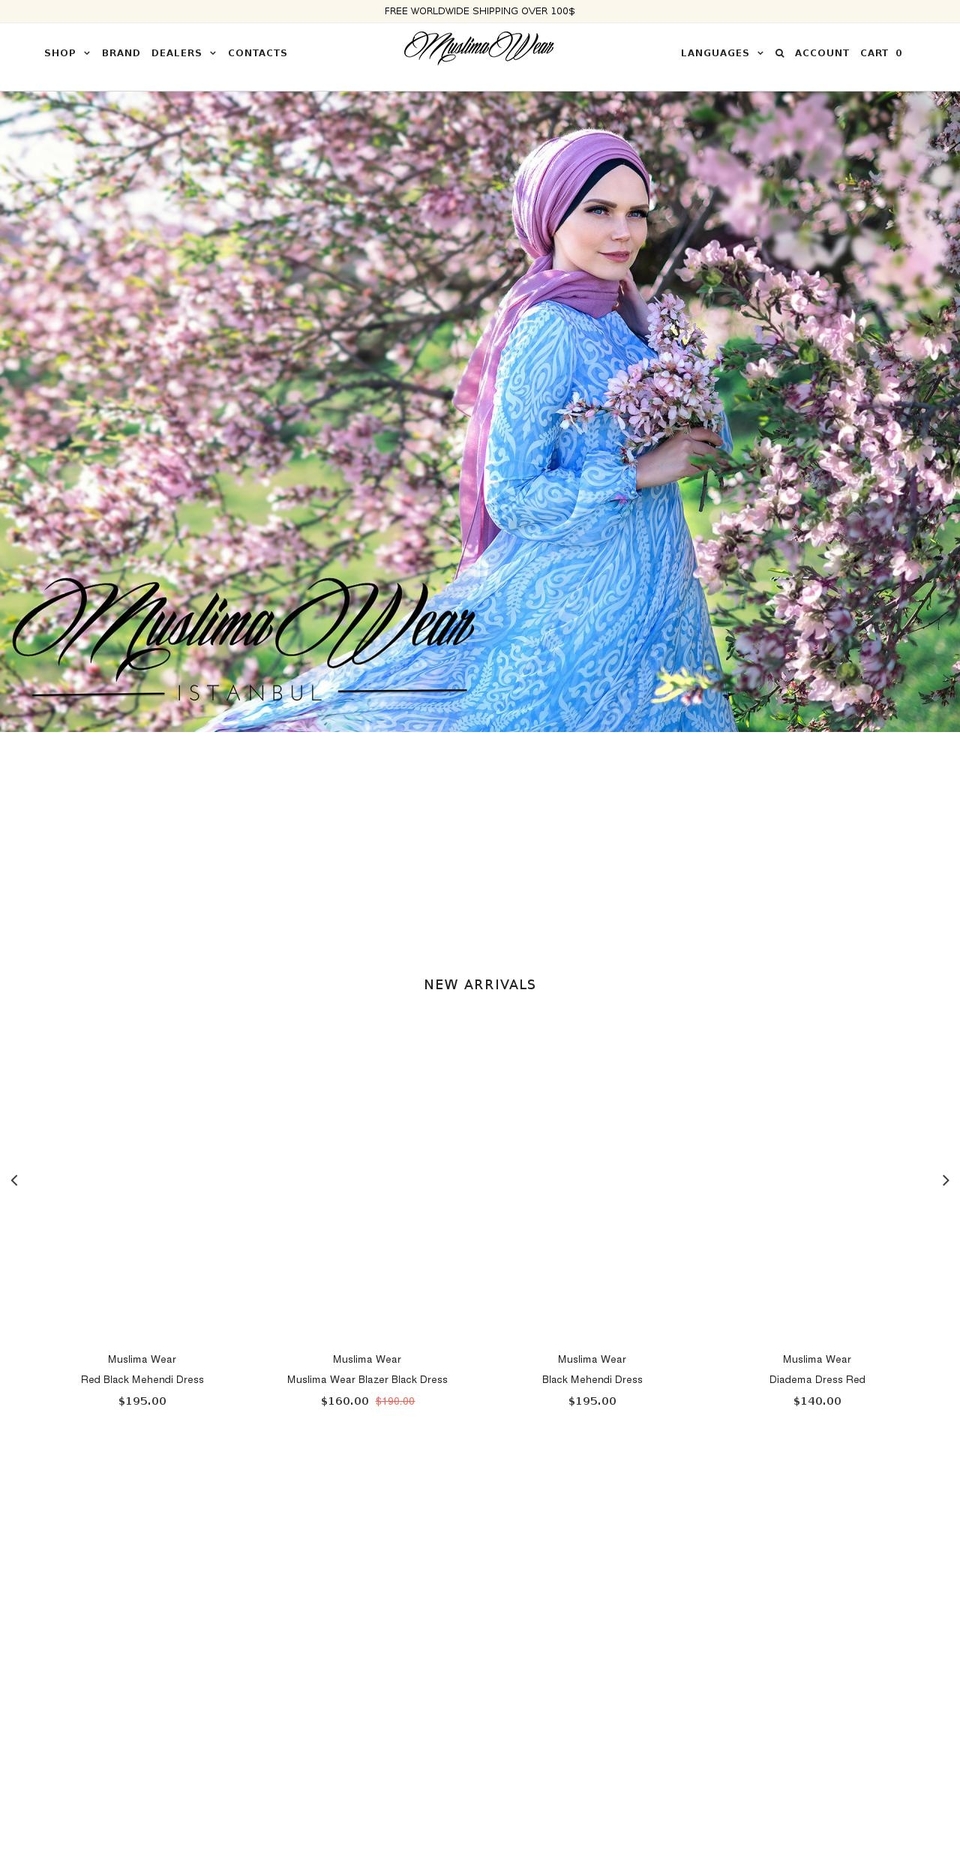 muslimawear.com shopify website screenshot